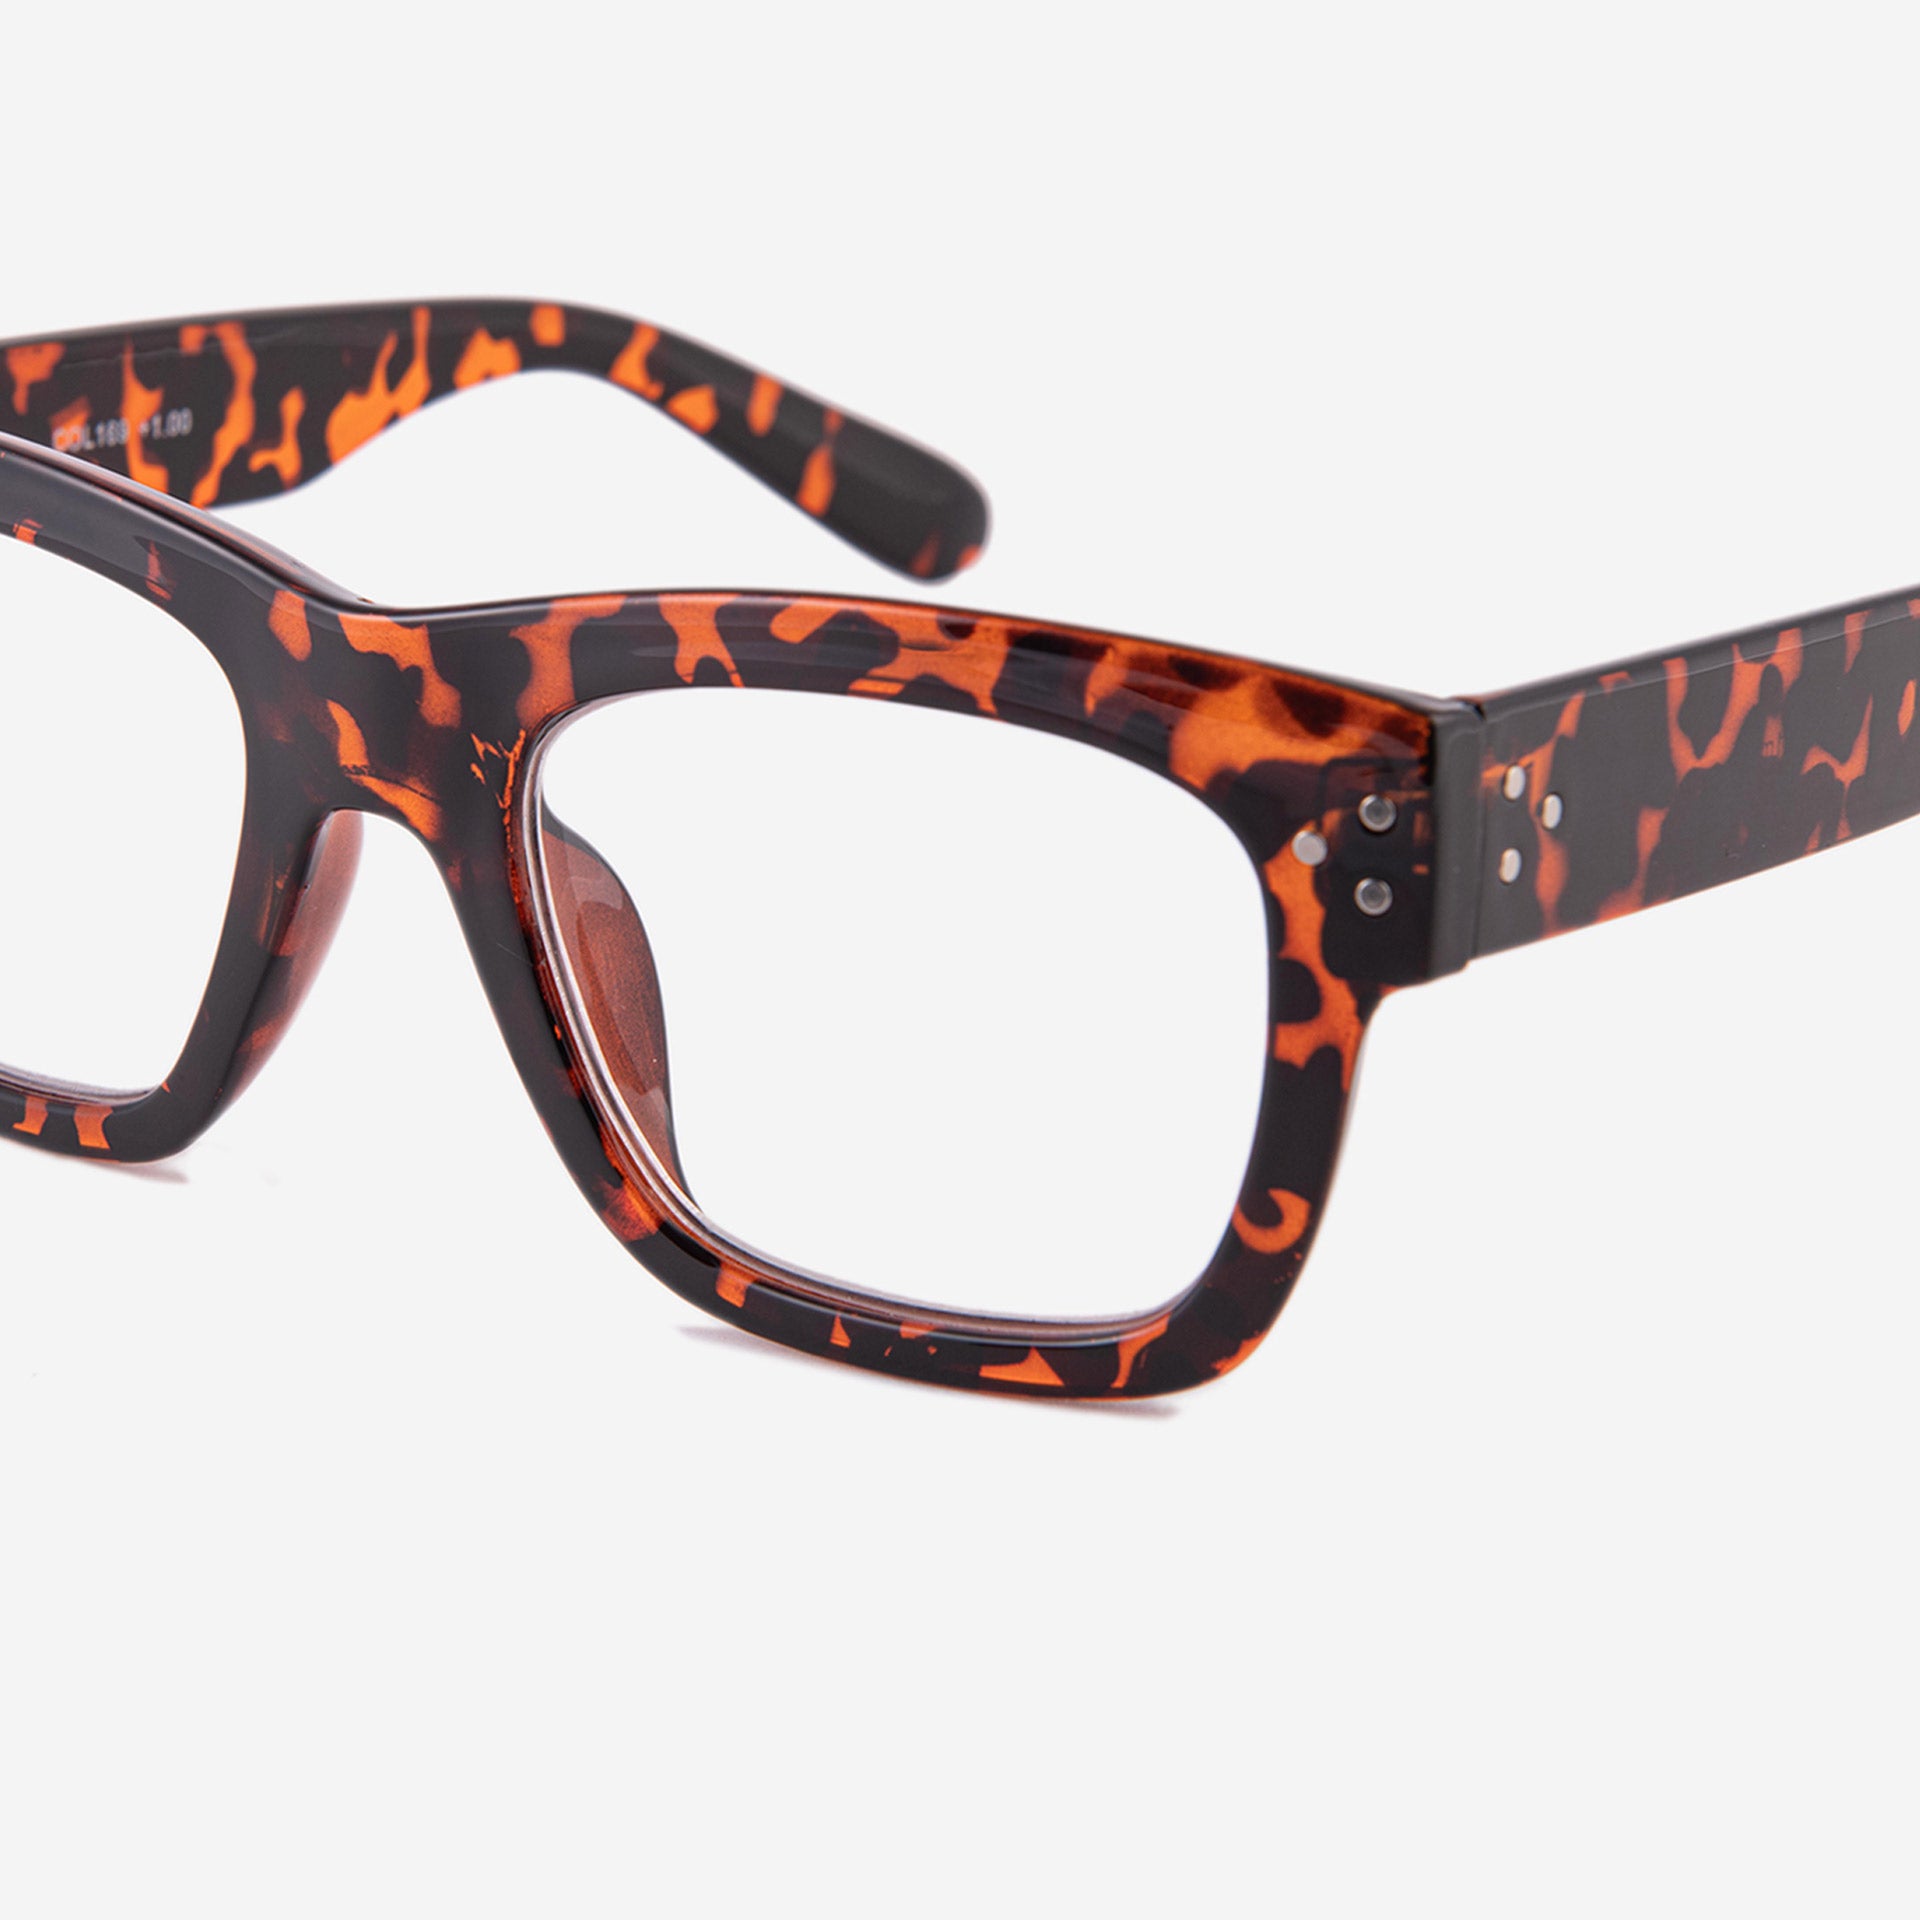 Square reading glasses - orange and black tortoiseshell pattern